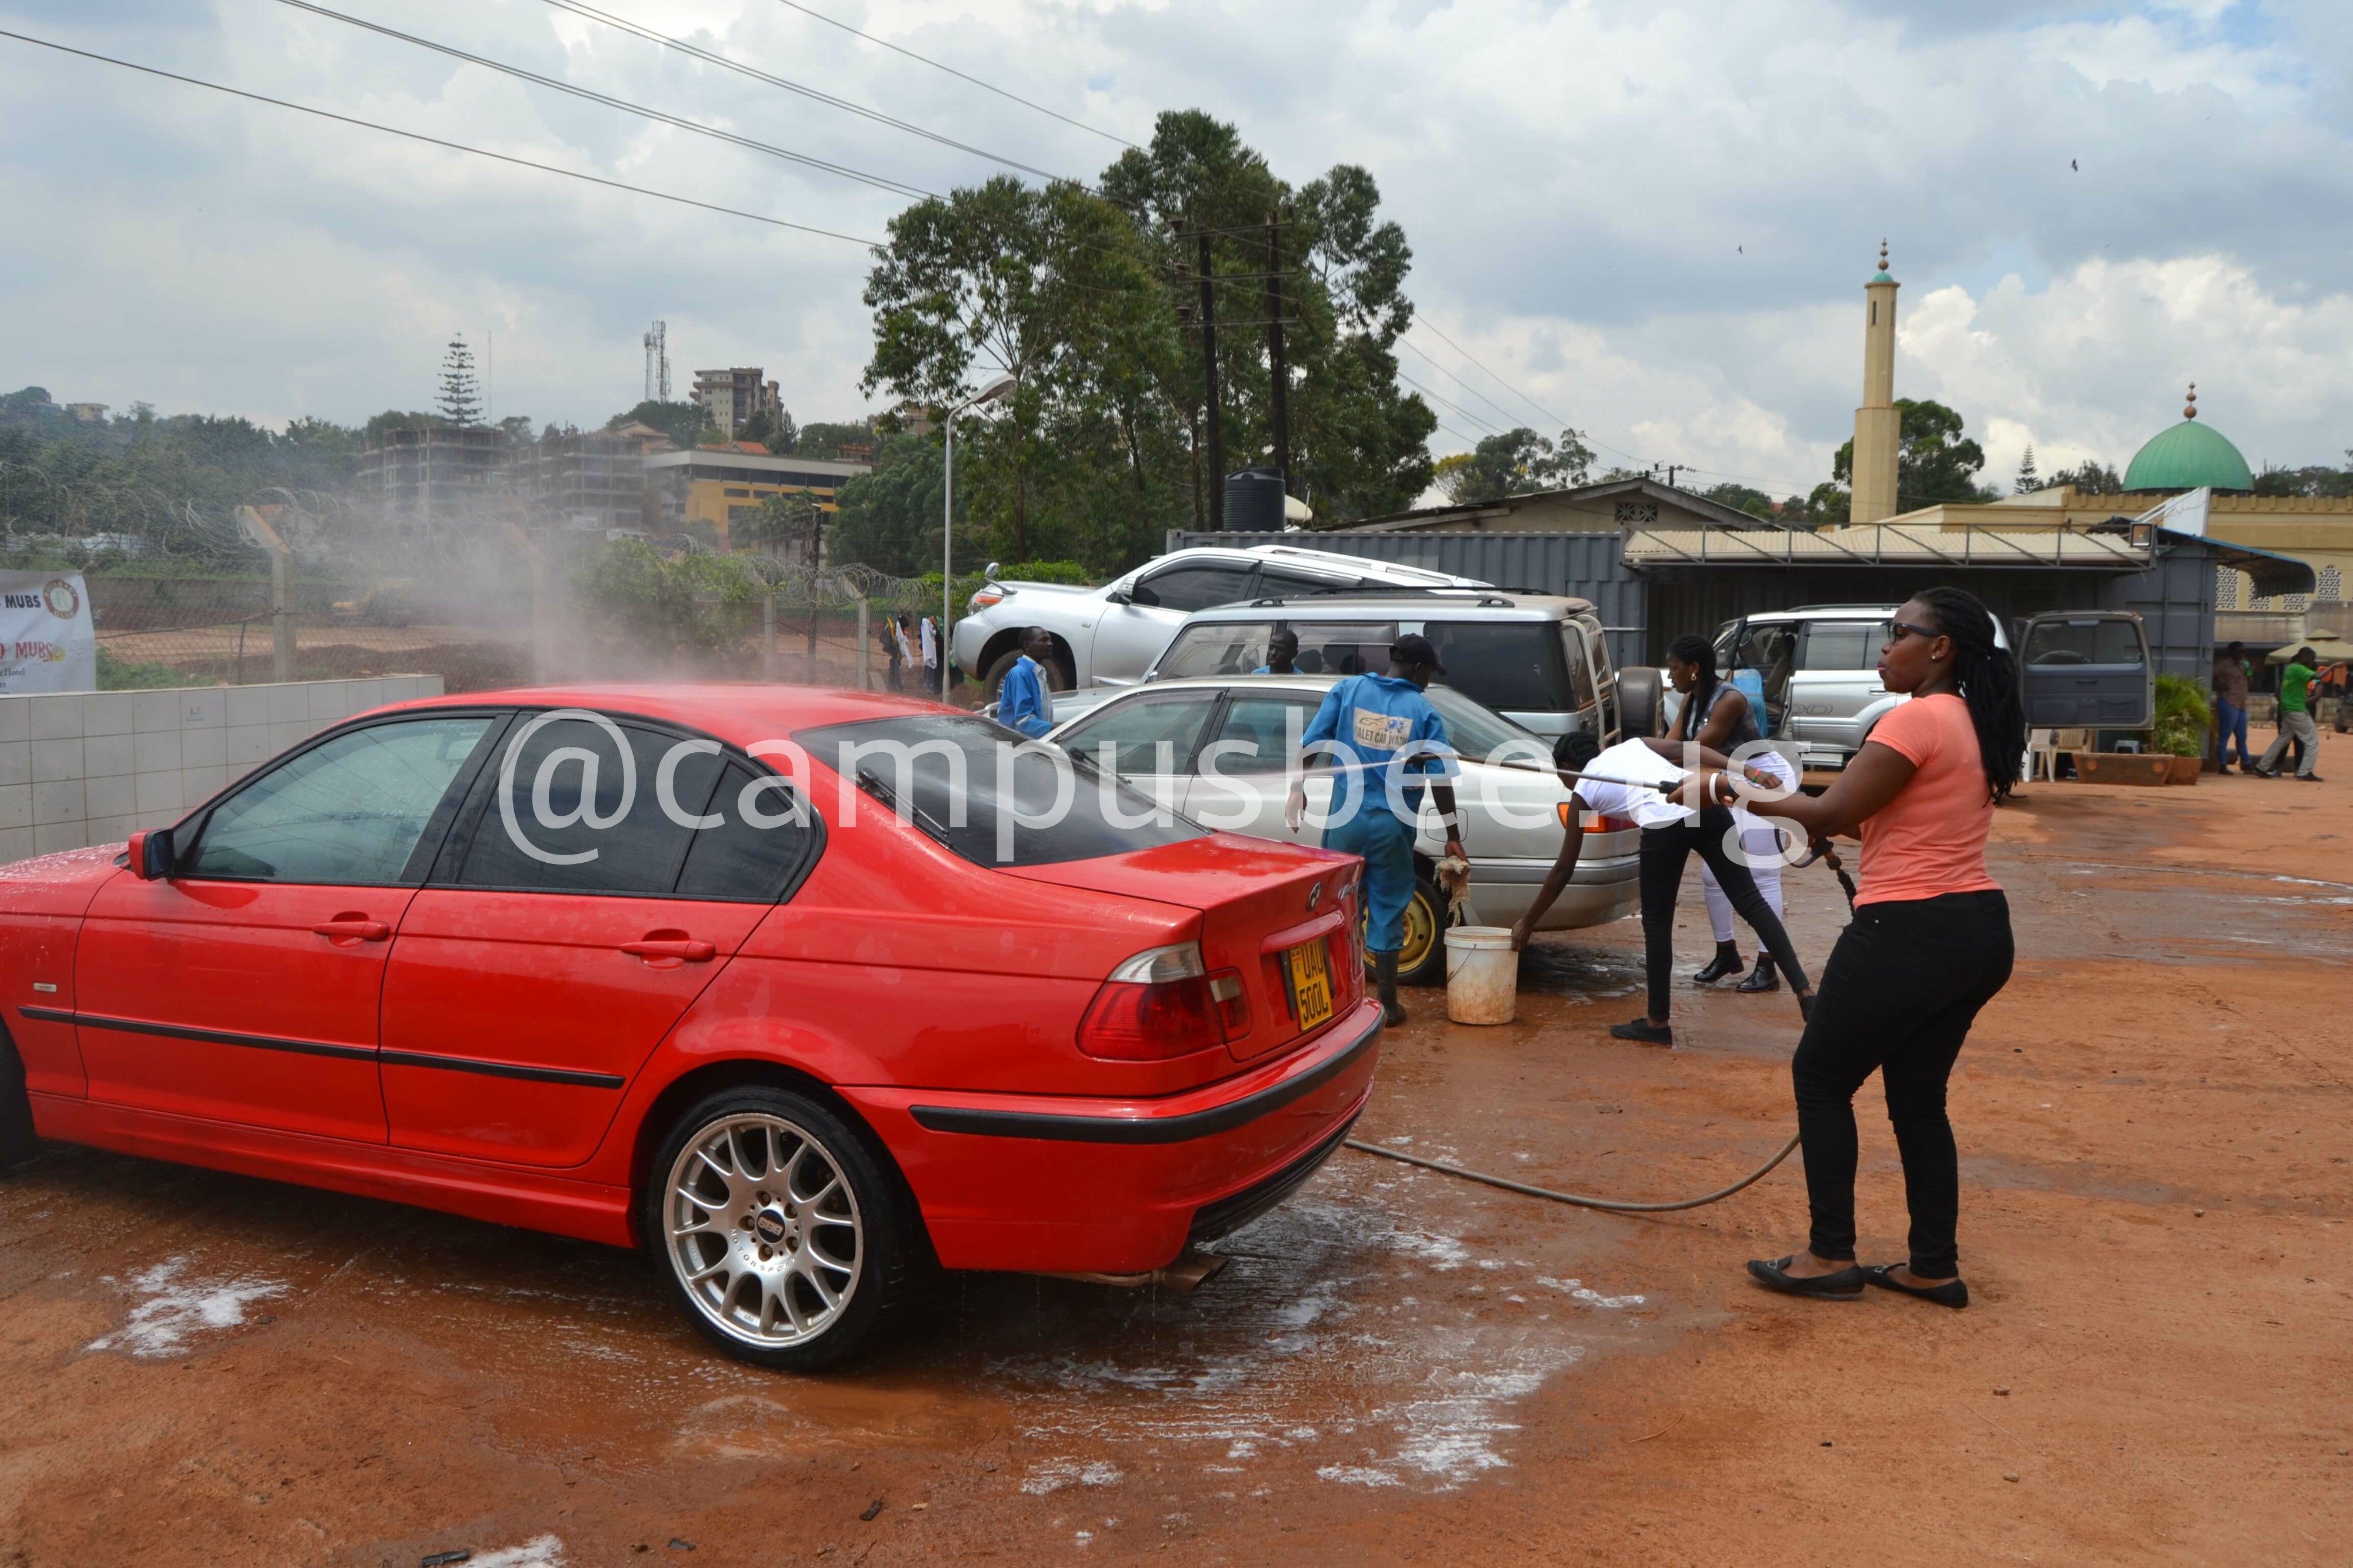 The successful car wash